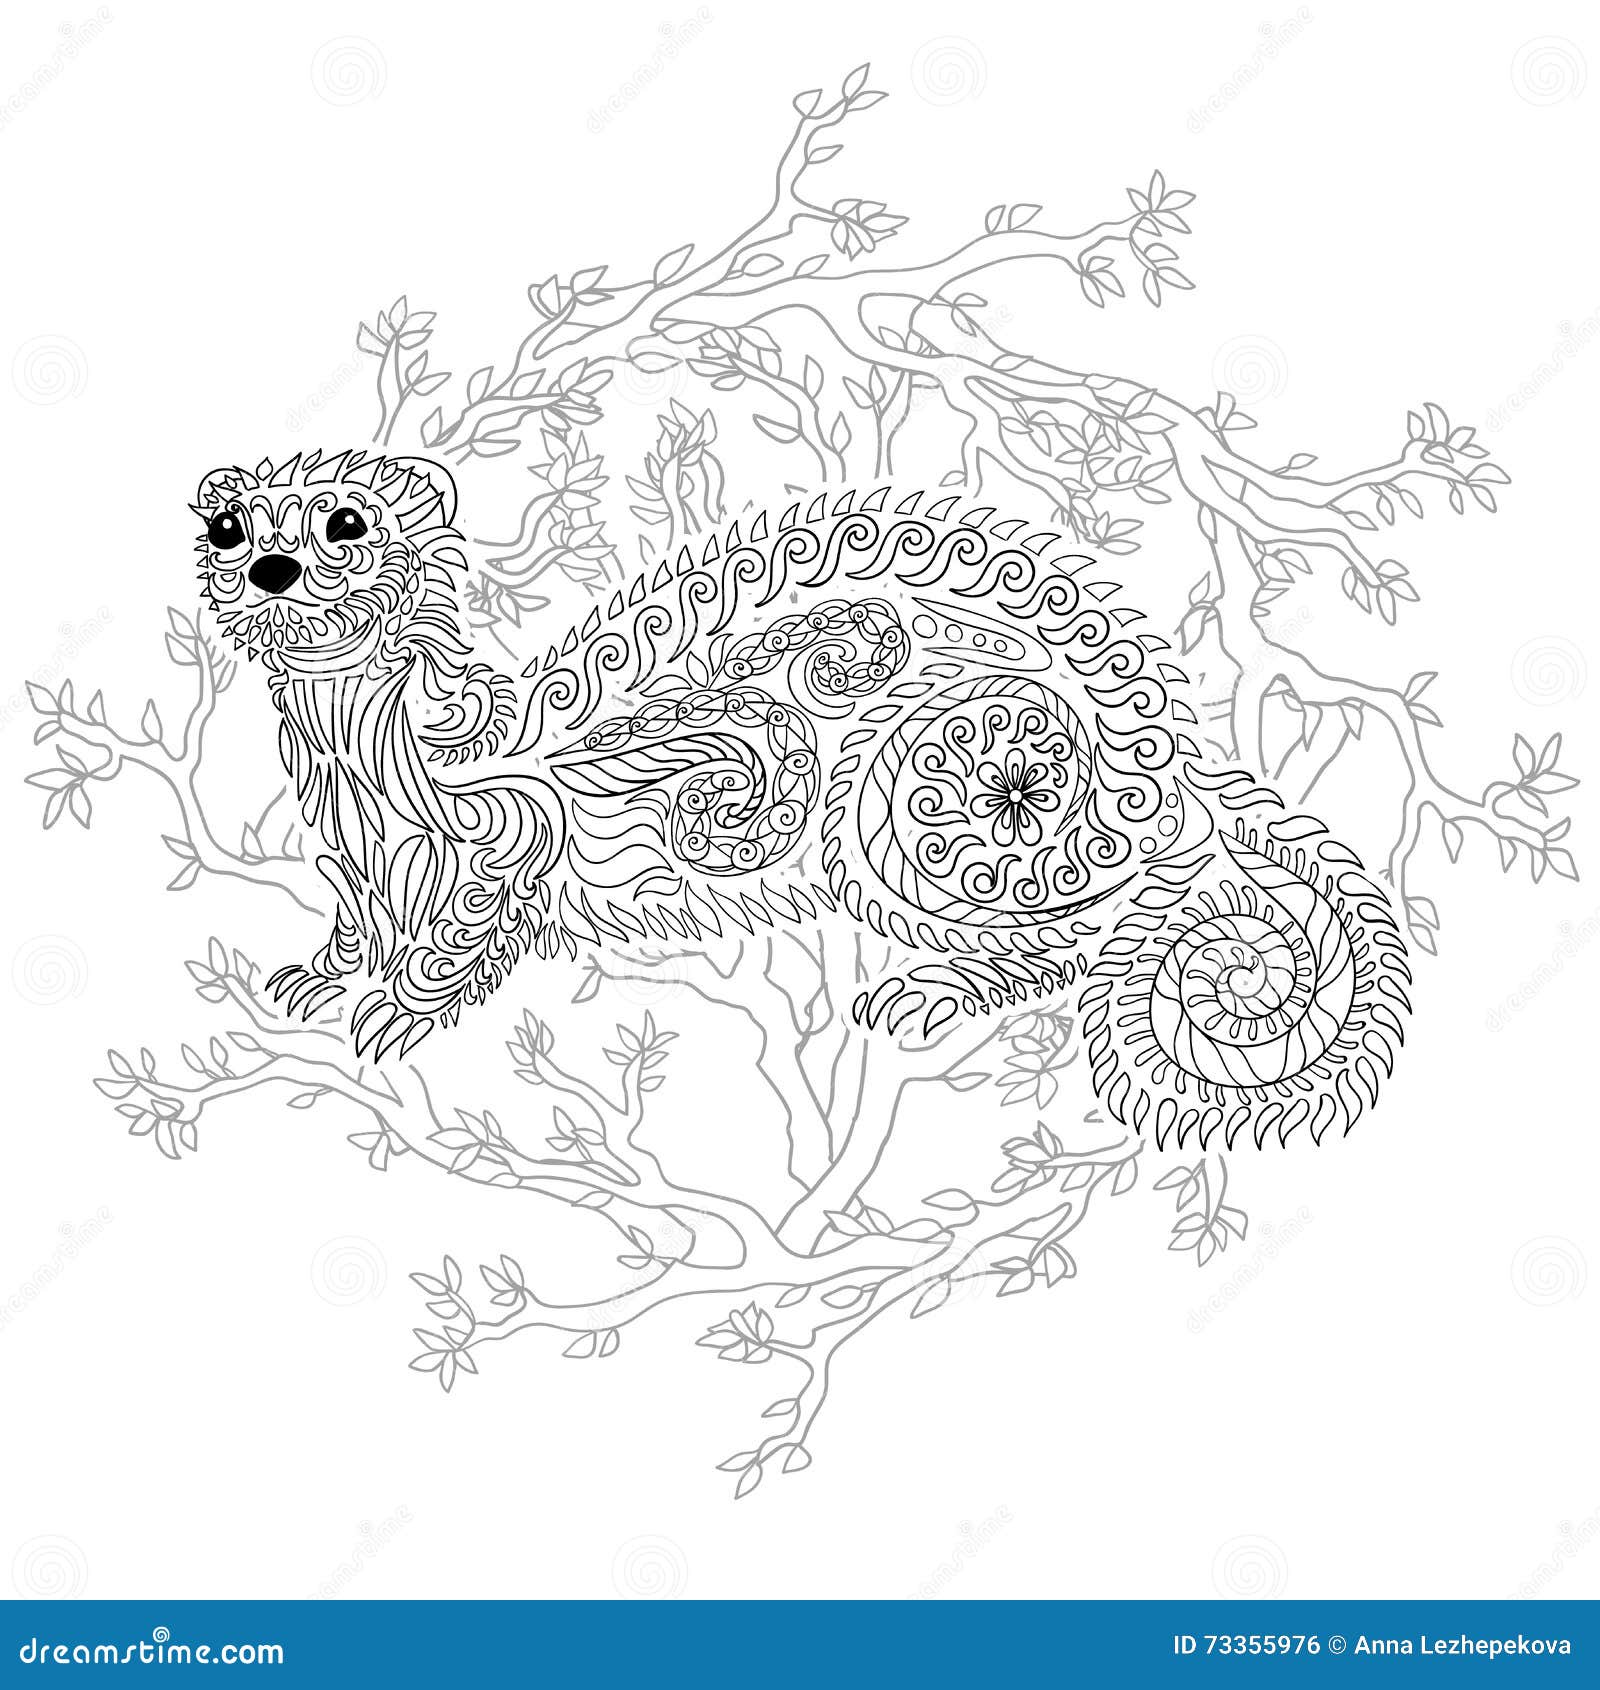 Ferret coloring stock illustrations â ferret coloring stock illustrations vectors clipart